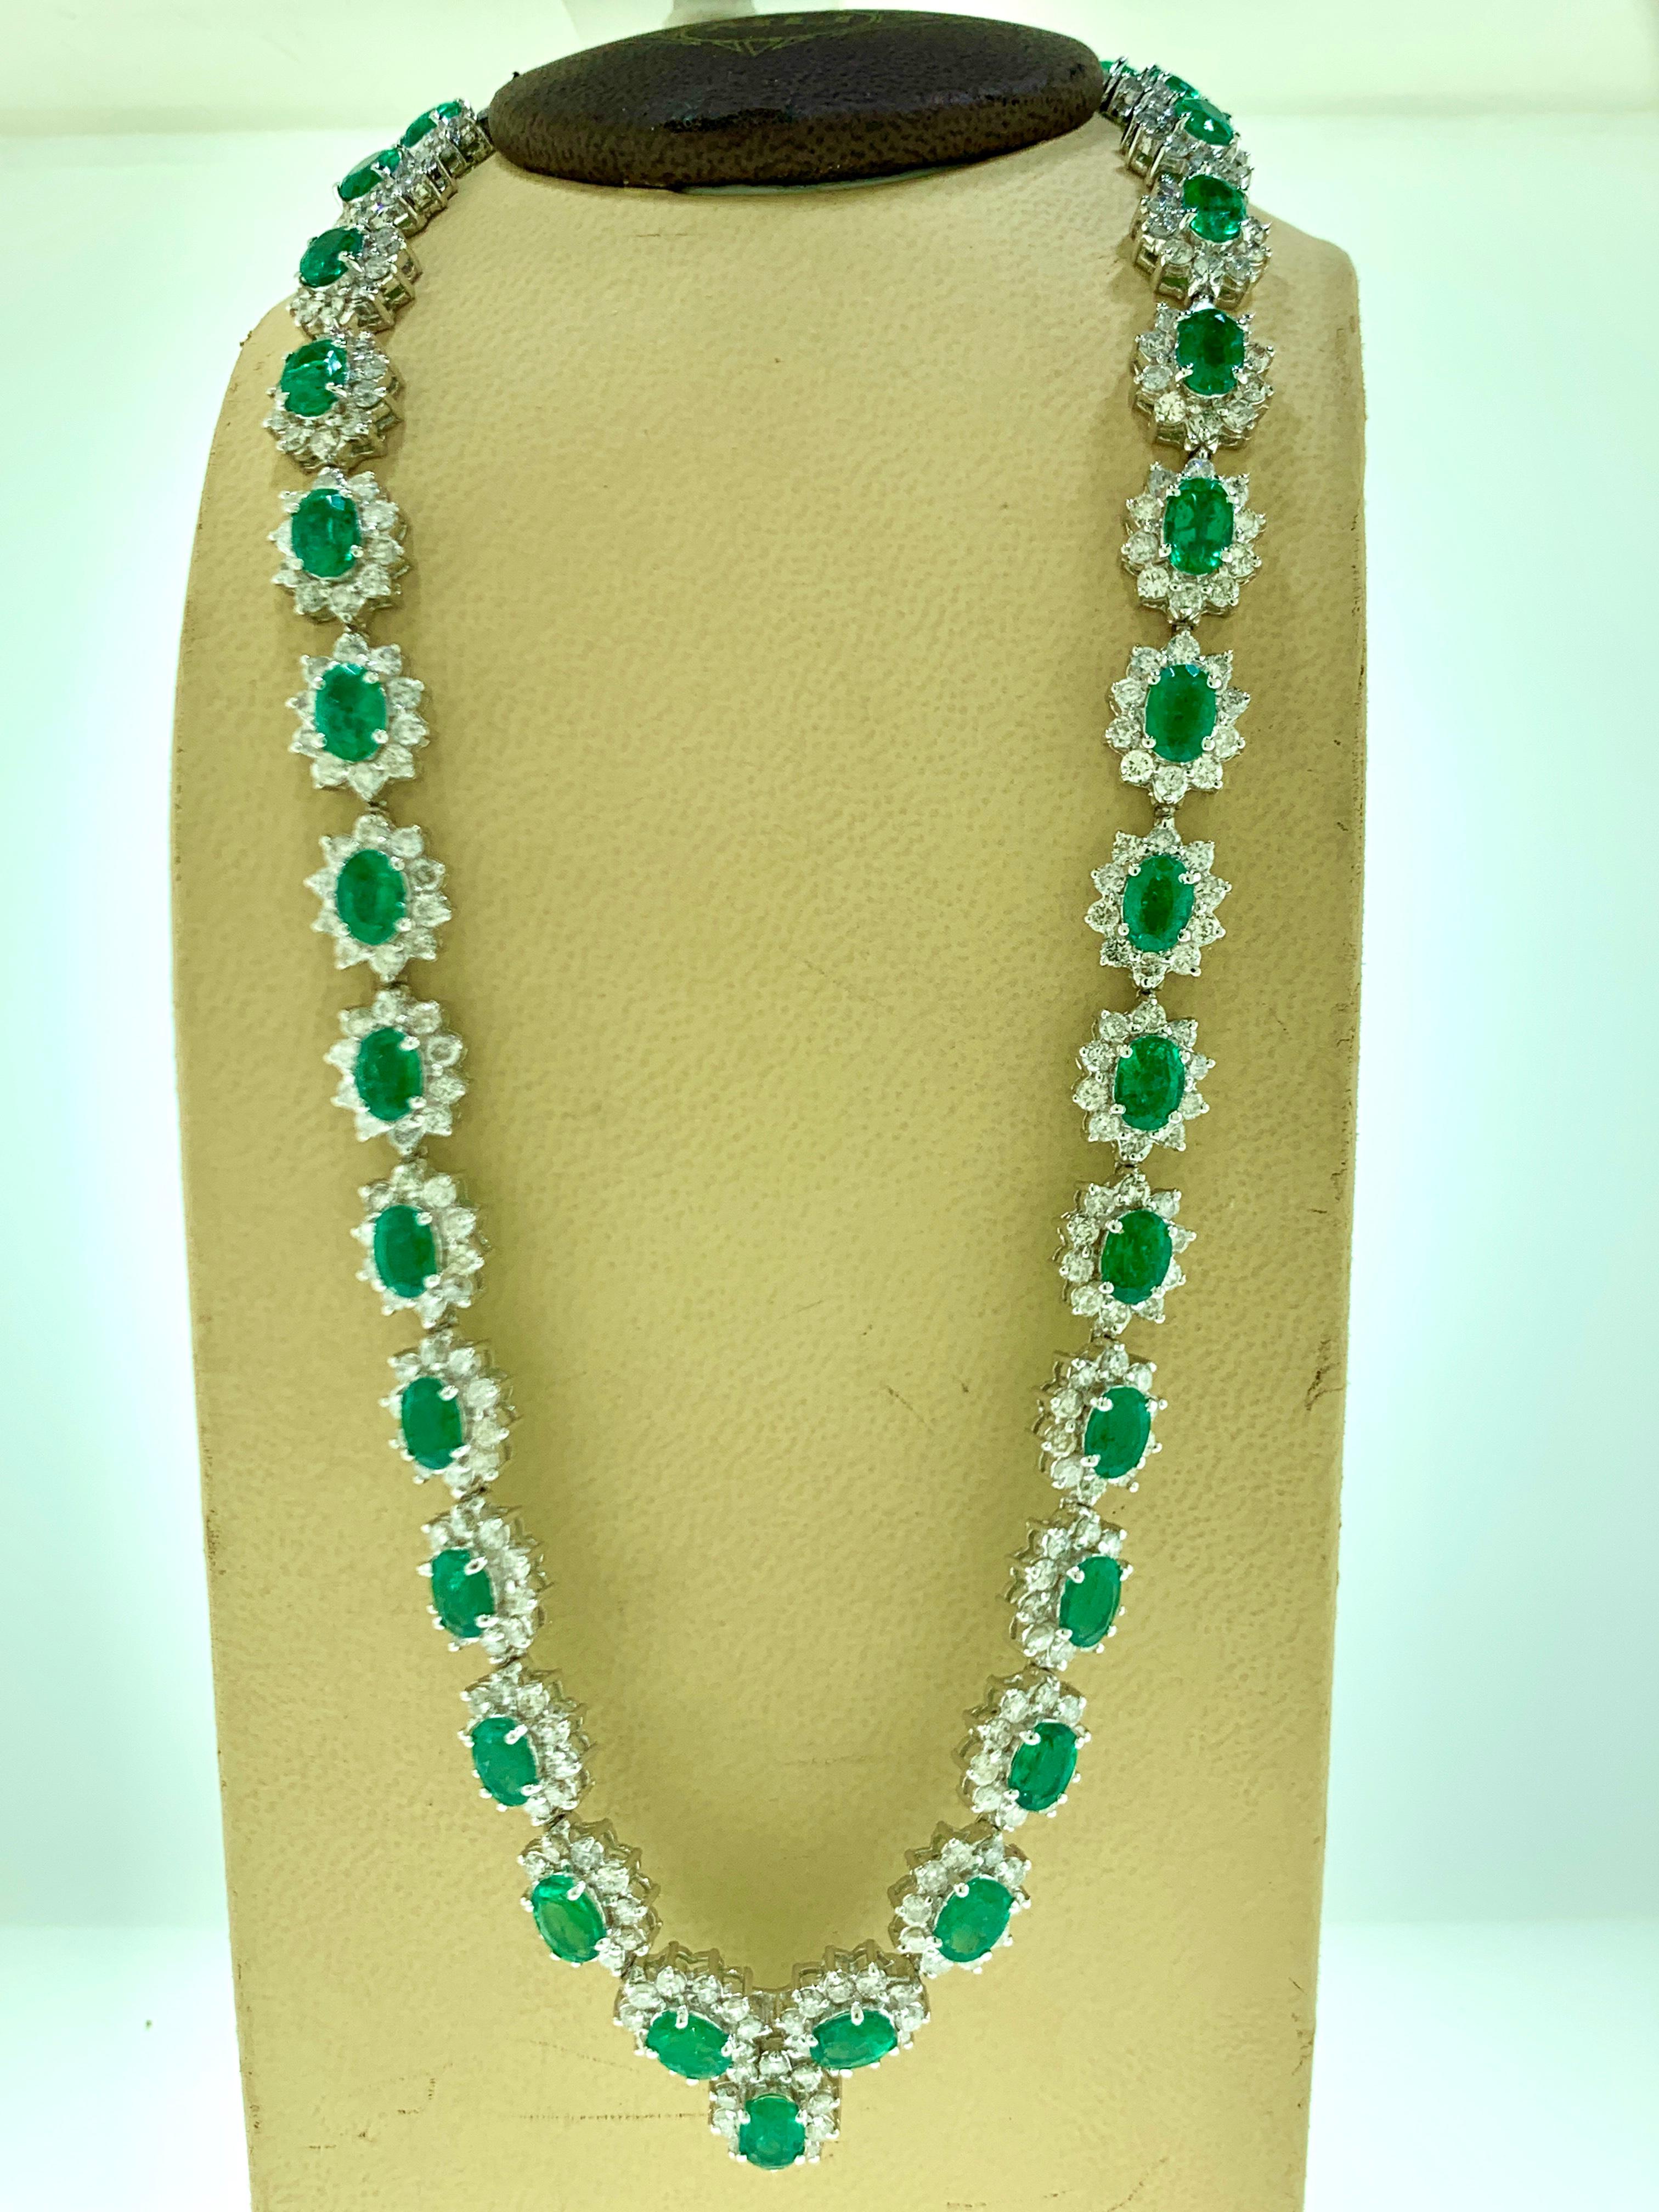 30 Carat Oval Shape Natural Emerald & 23 Carat Diamond Necklace in 18 Karat Gold For Sale 1